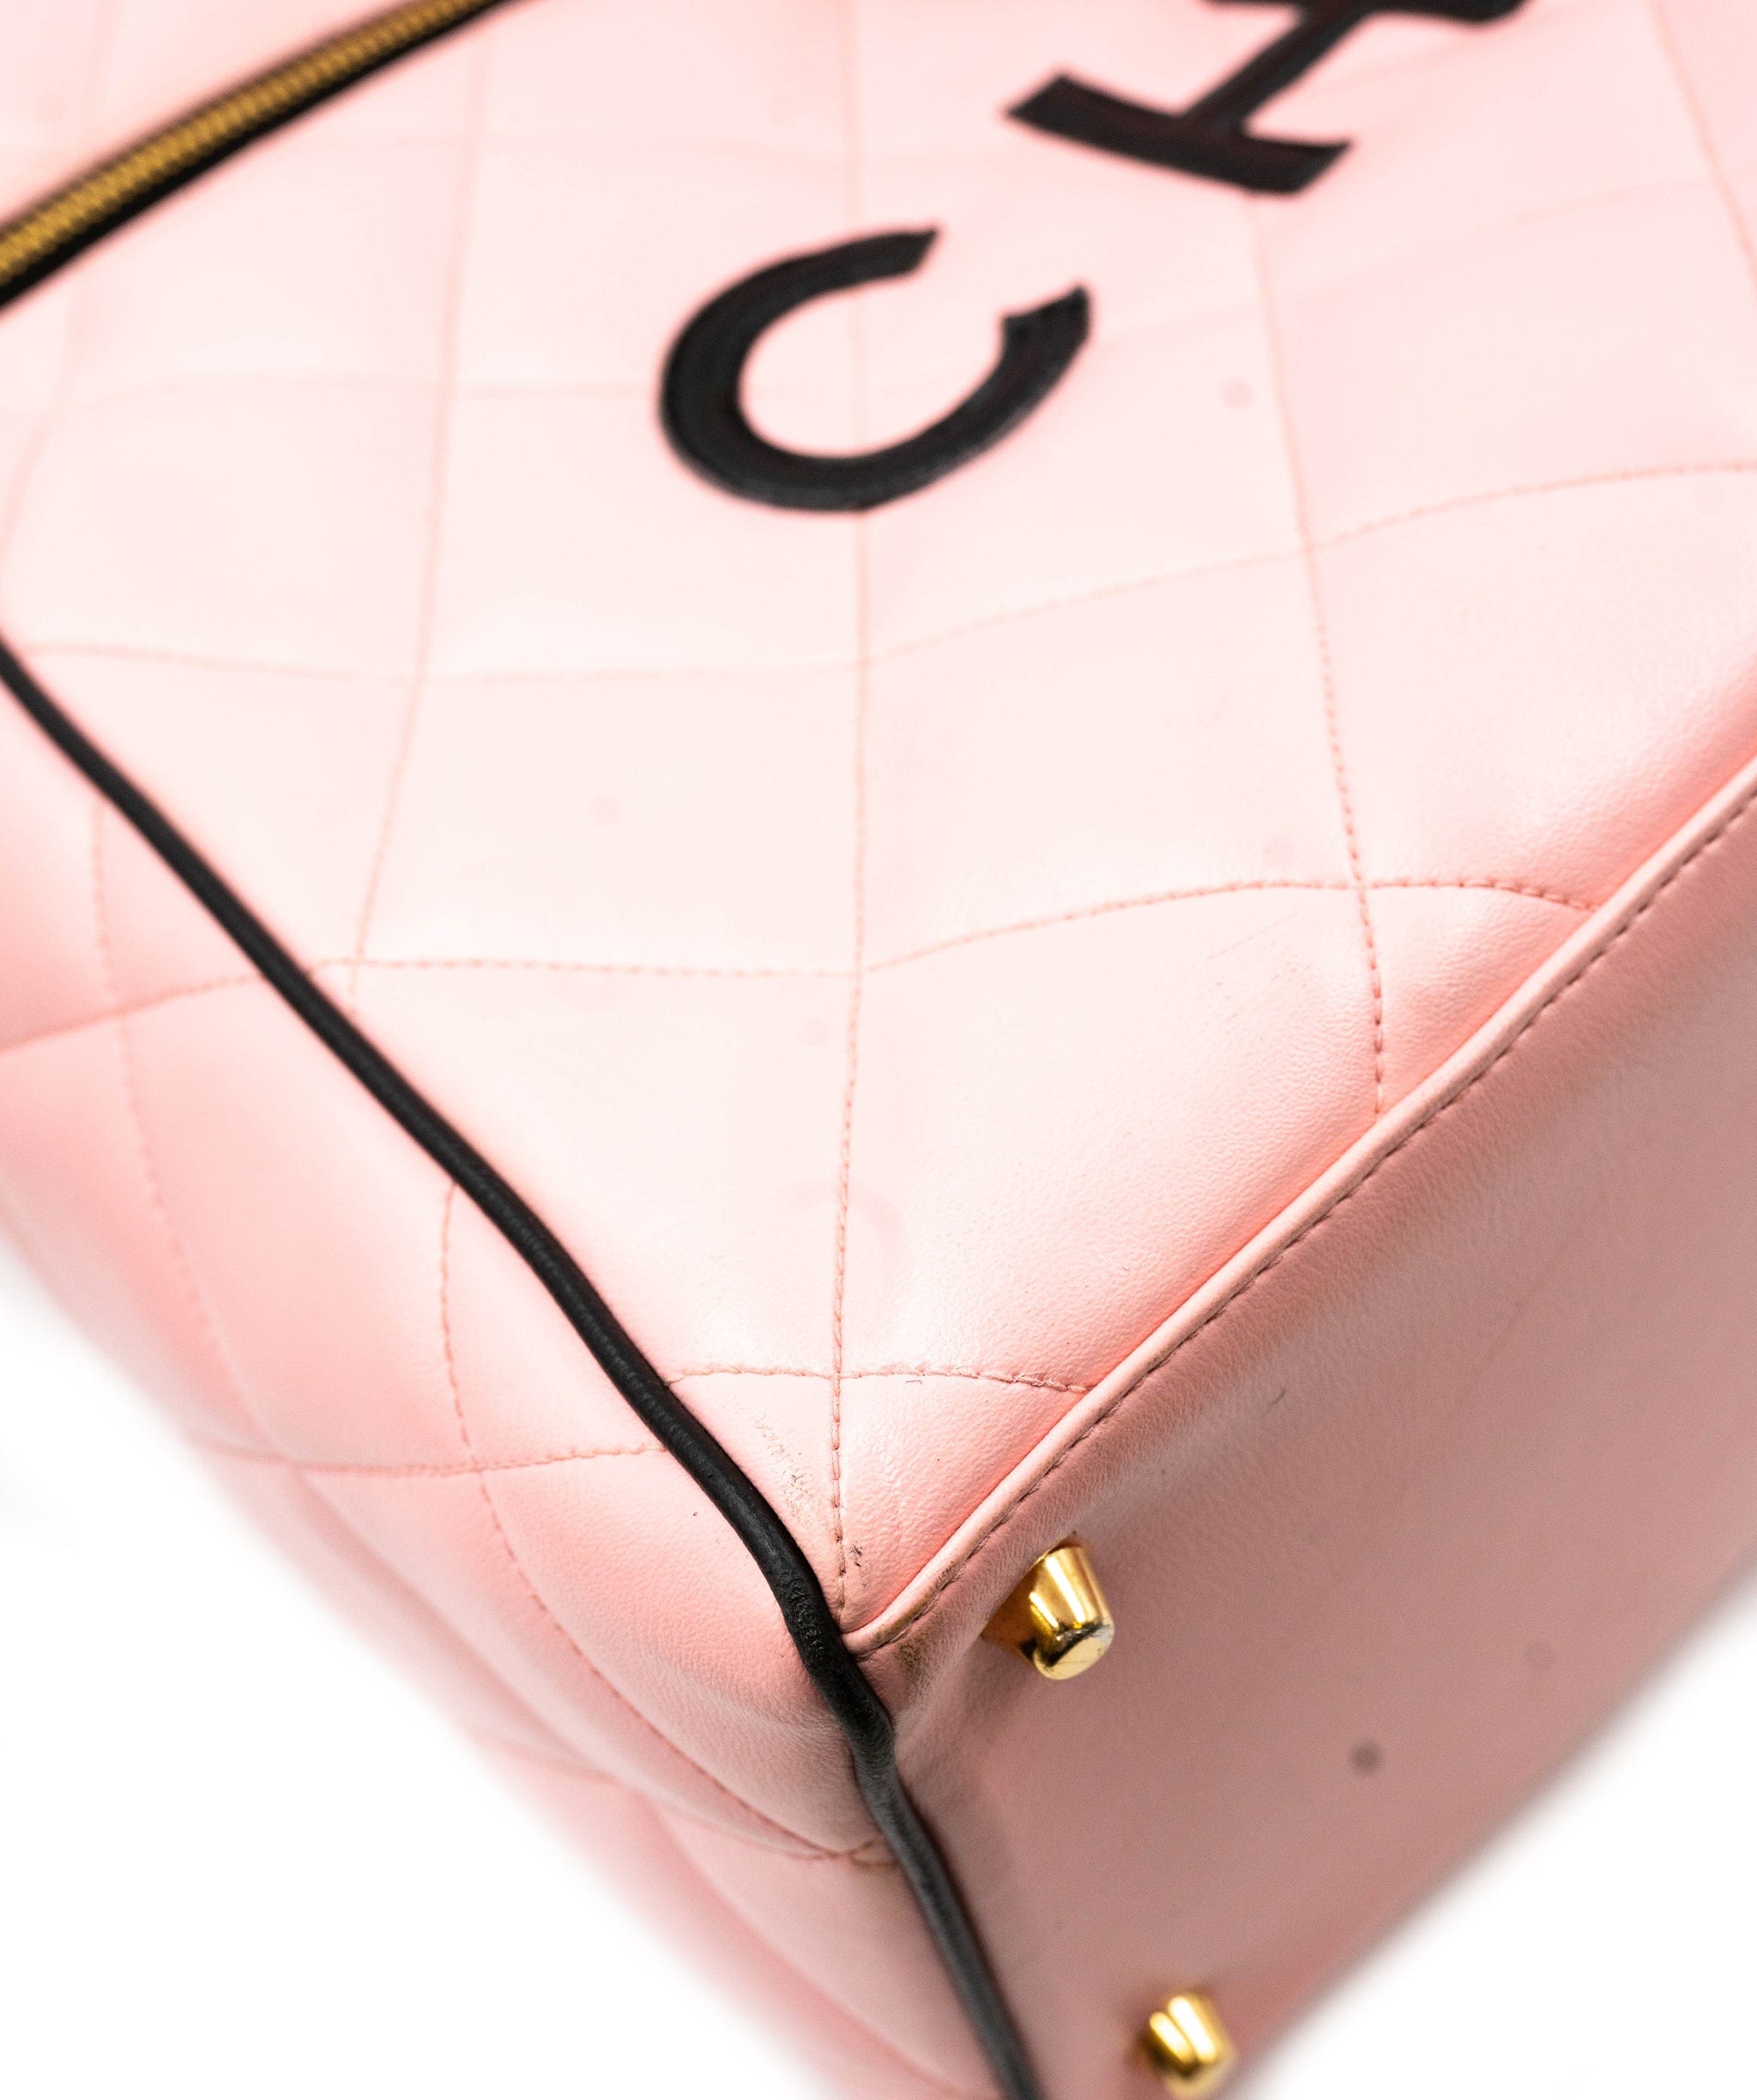 Chanel Chanel Pink Calfskin Boston bag ASL3692